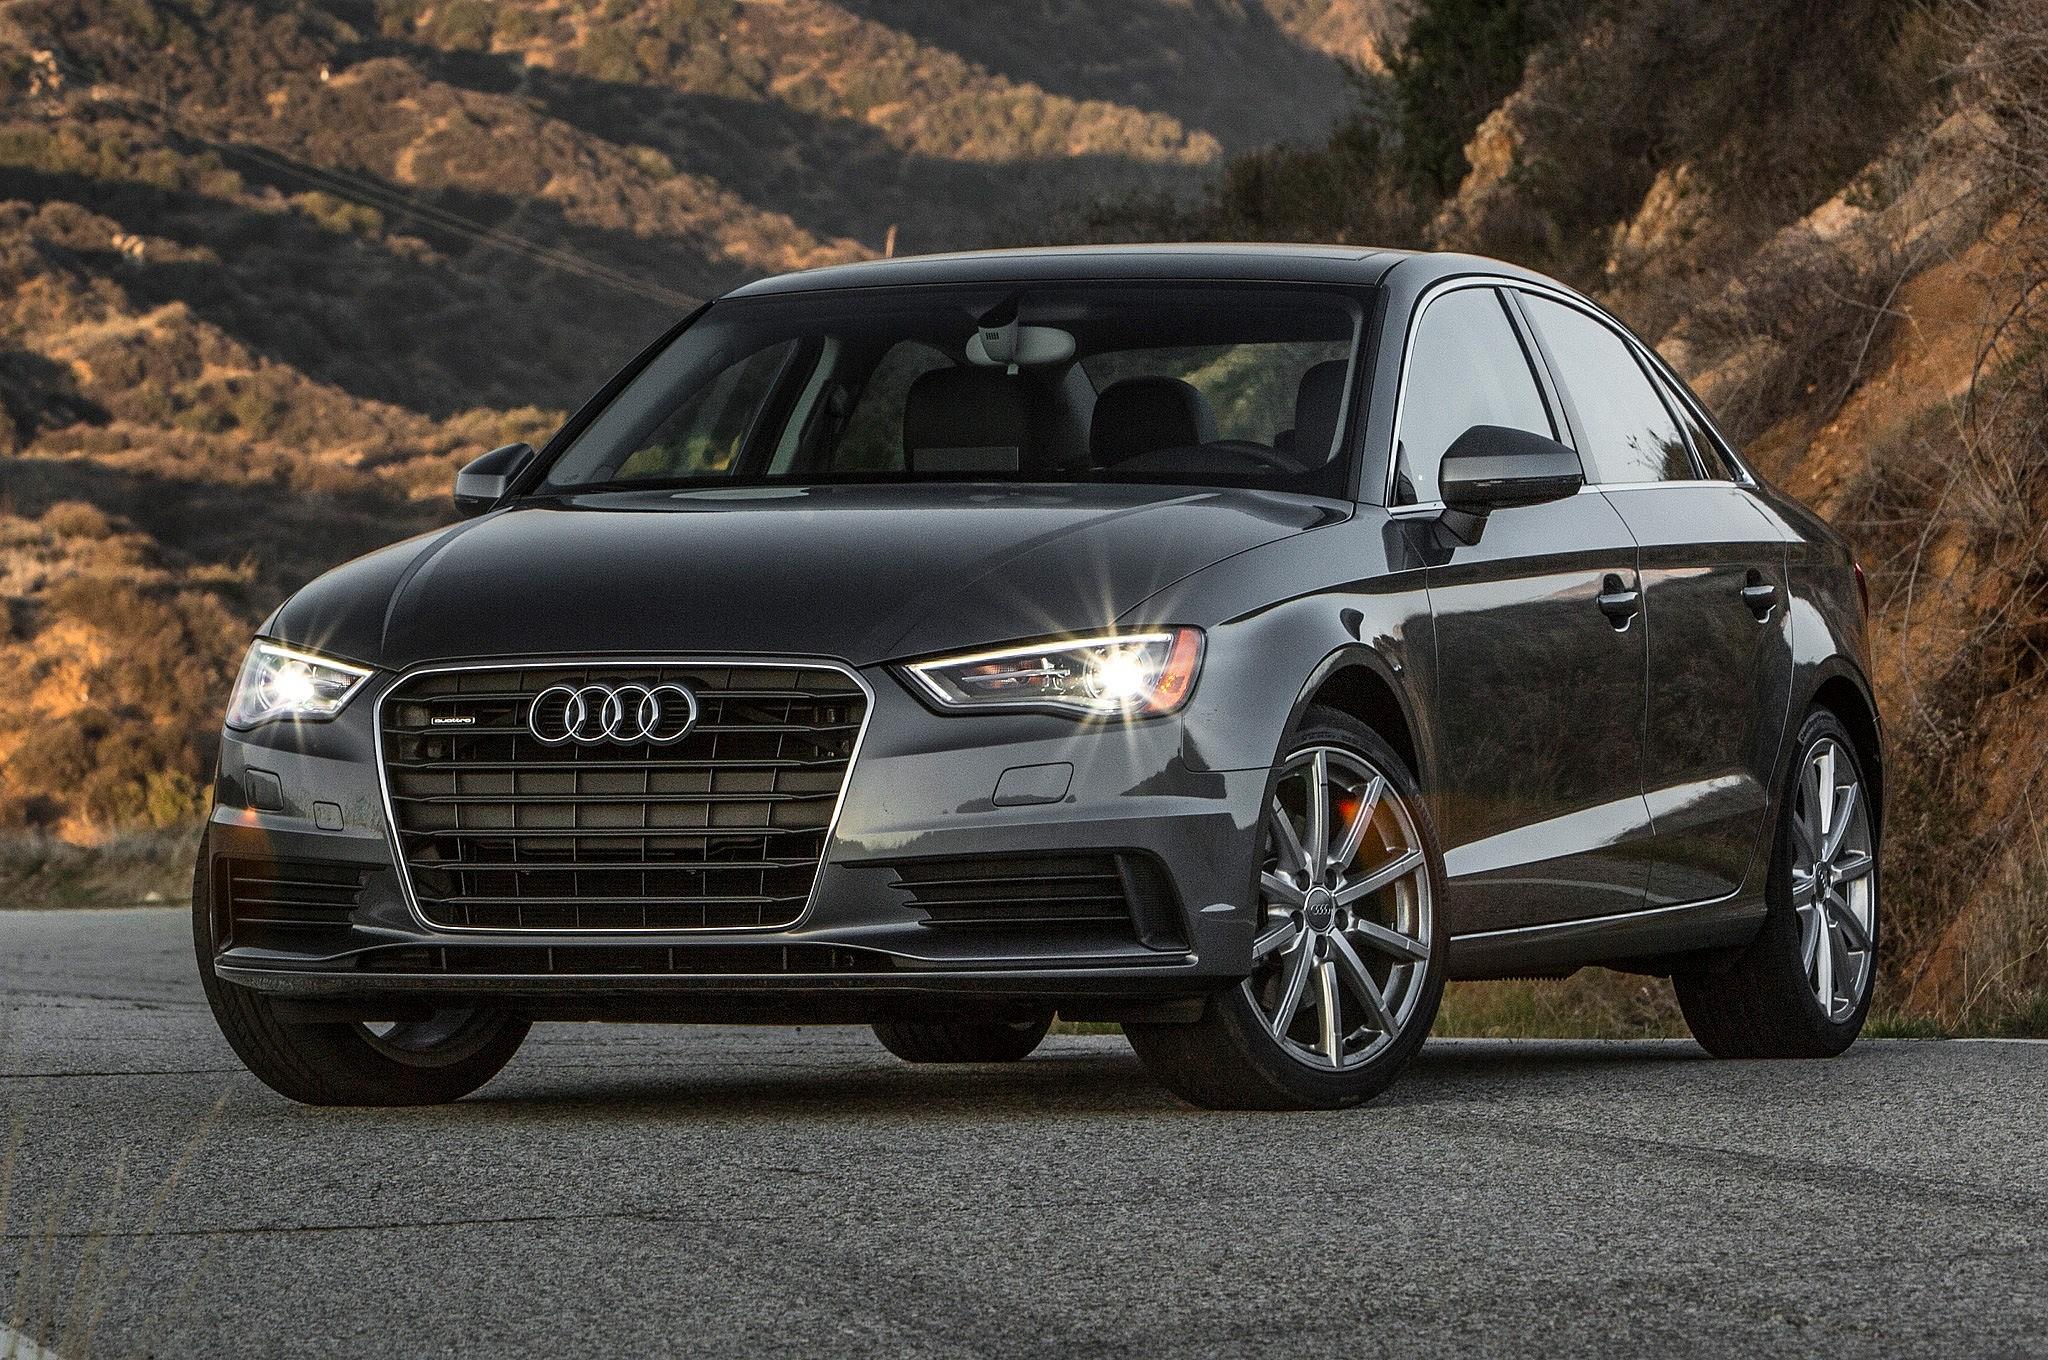 Audi - Audi A3 2015 Gray , HD Wallpaper & Backgrounds